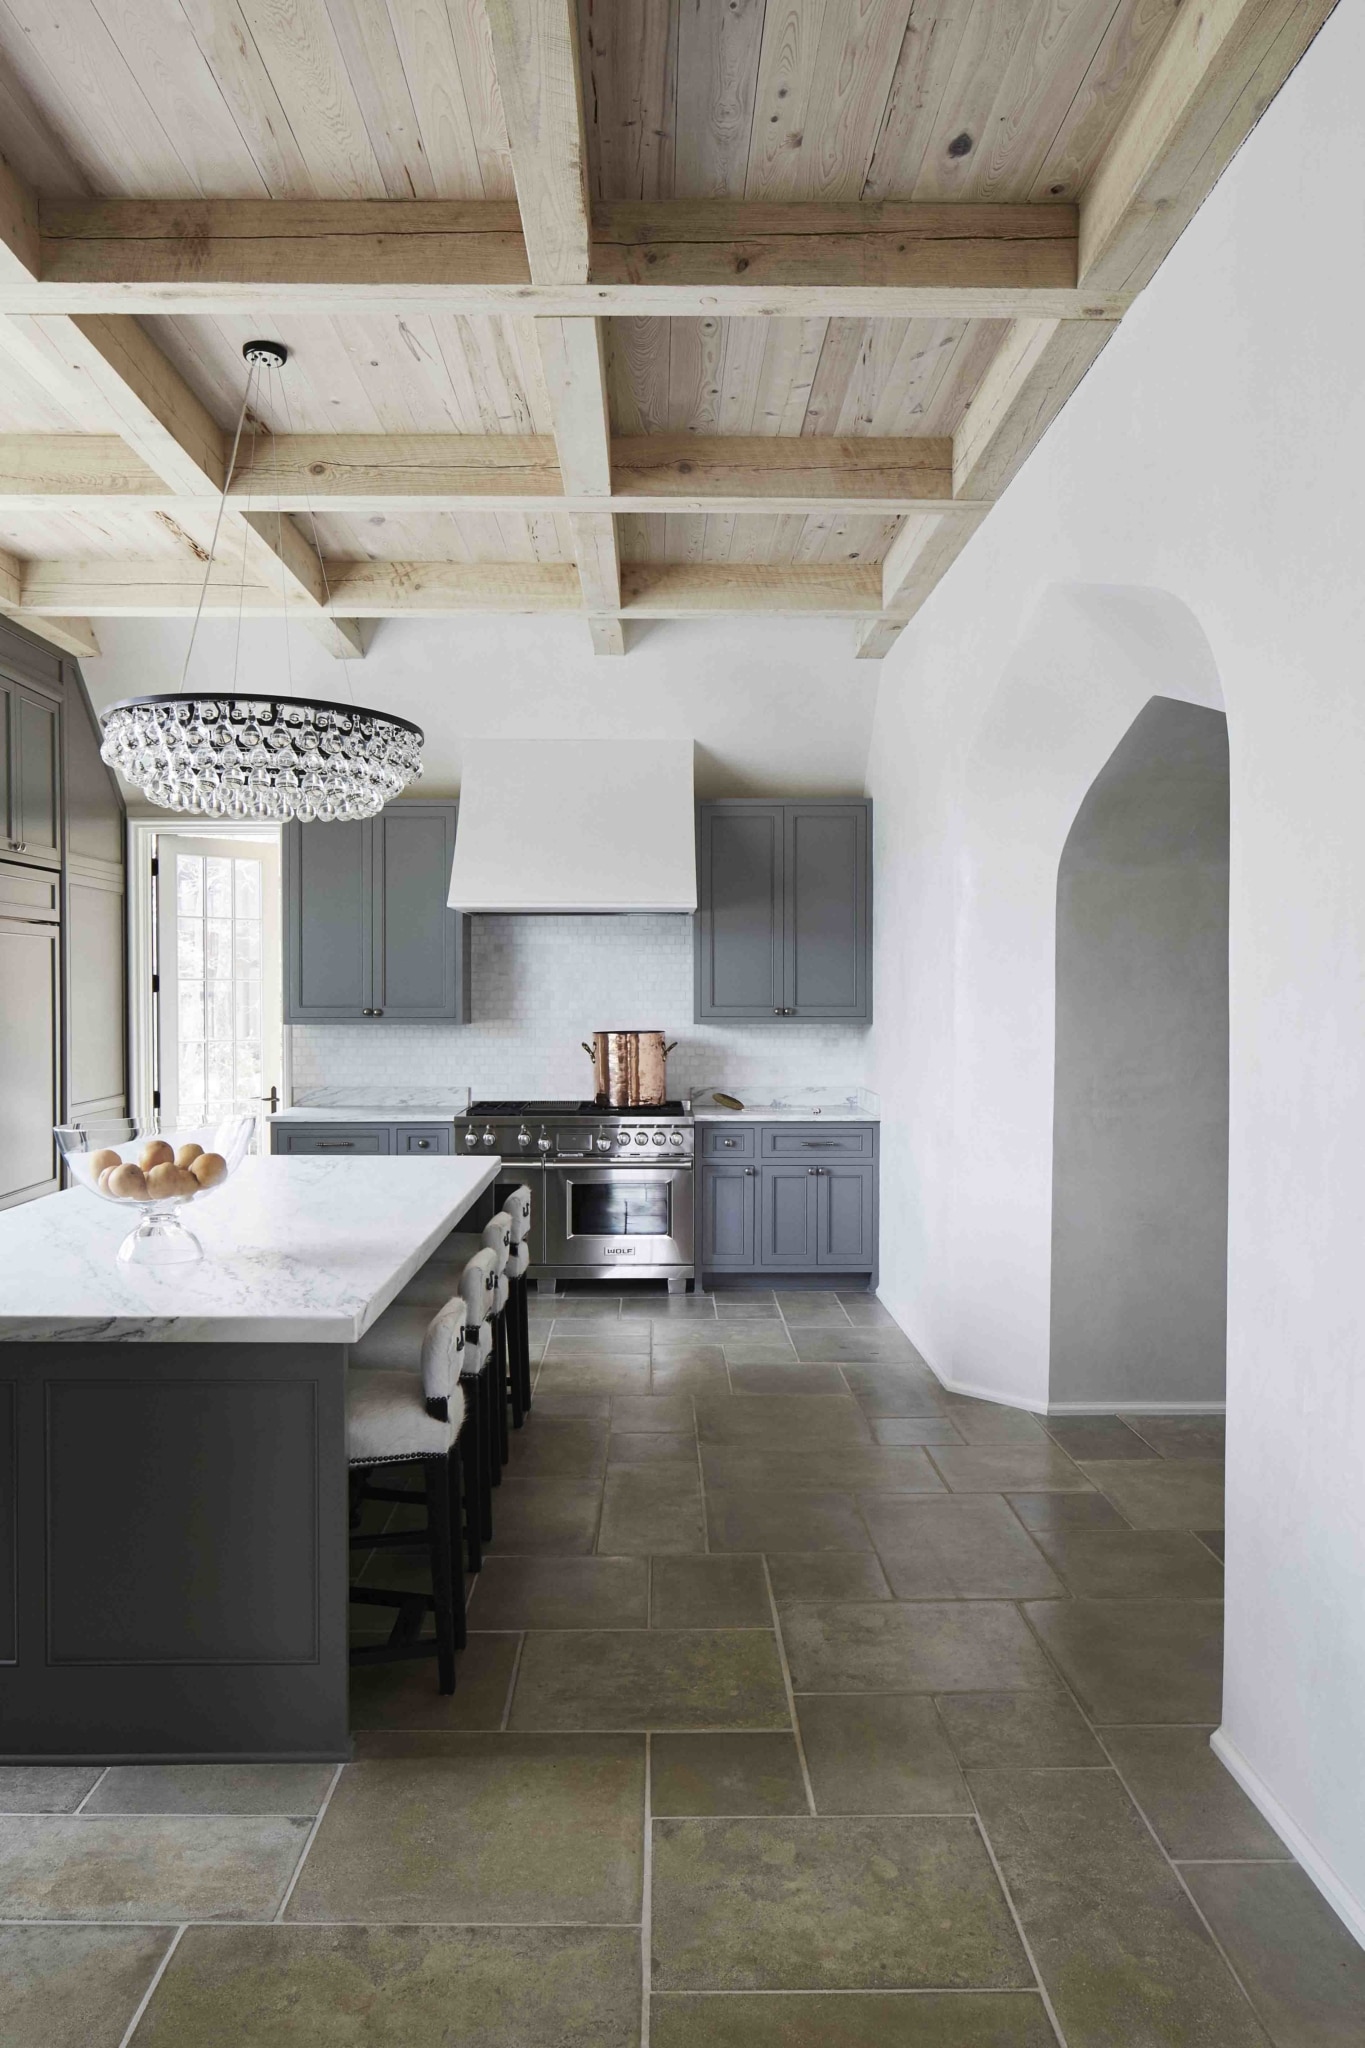 Jeffrey Dungan Architect | William Abranowicz Photography | kitchen | kitchen design | kitchen decor | kitchen remodel beams | wood beams